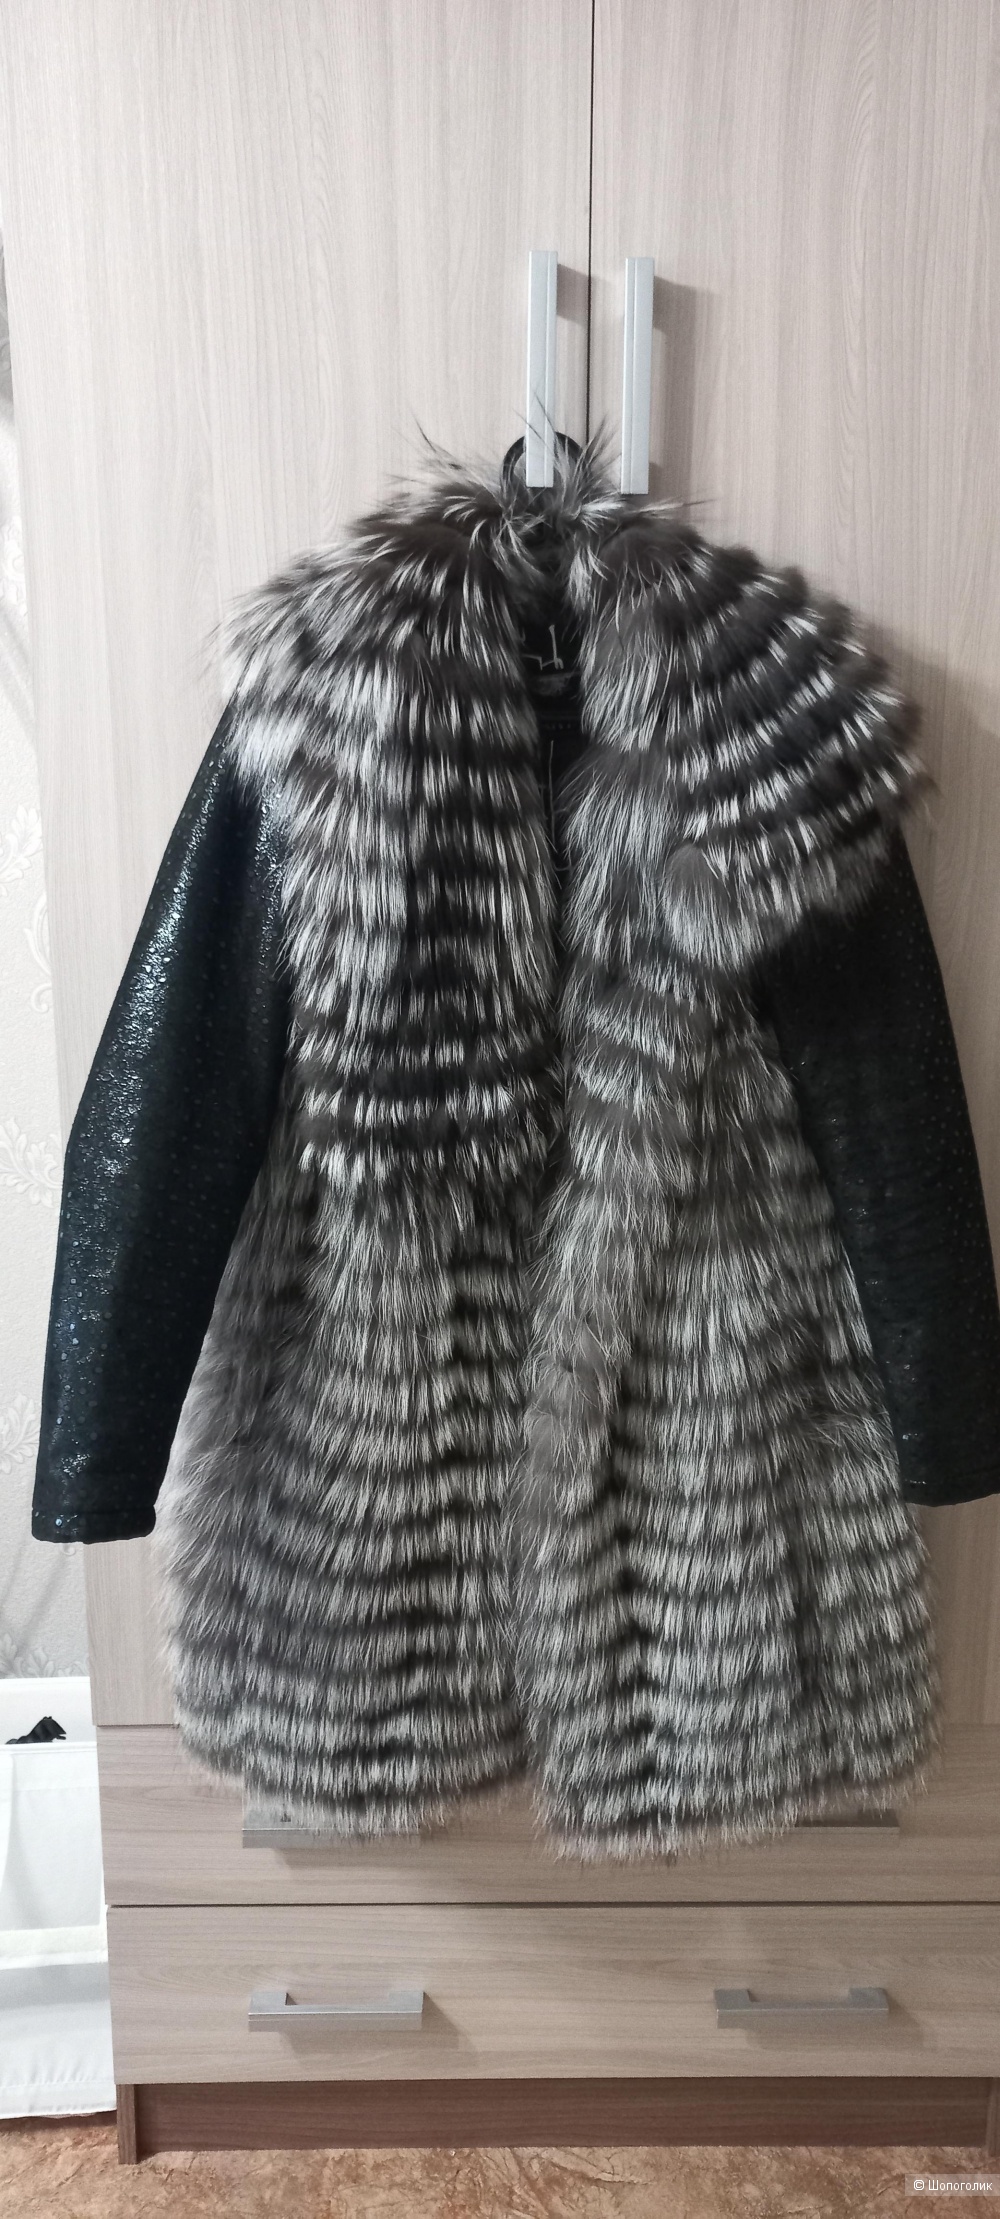 Пальто жилет чернобурка SHAKY,  размер  42-44 (+-46)